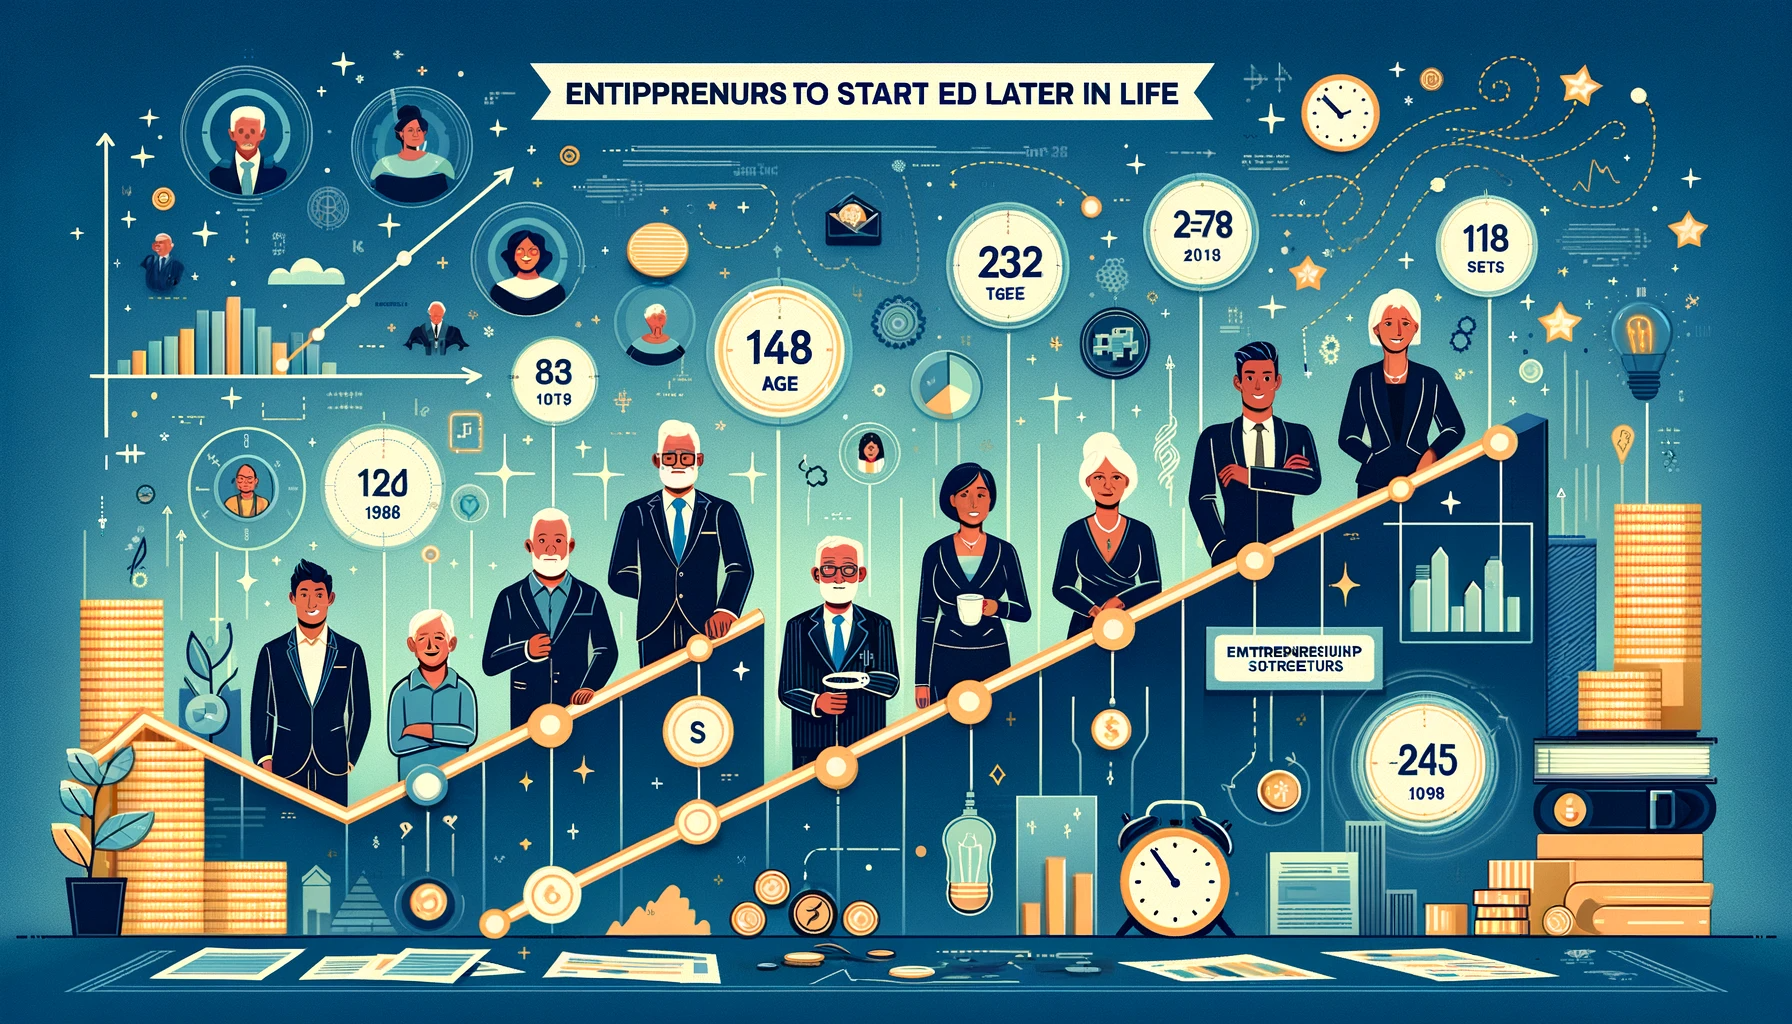 Entrepreneurship Knows No Age Inspiring Stories (infographic)1